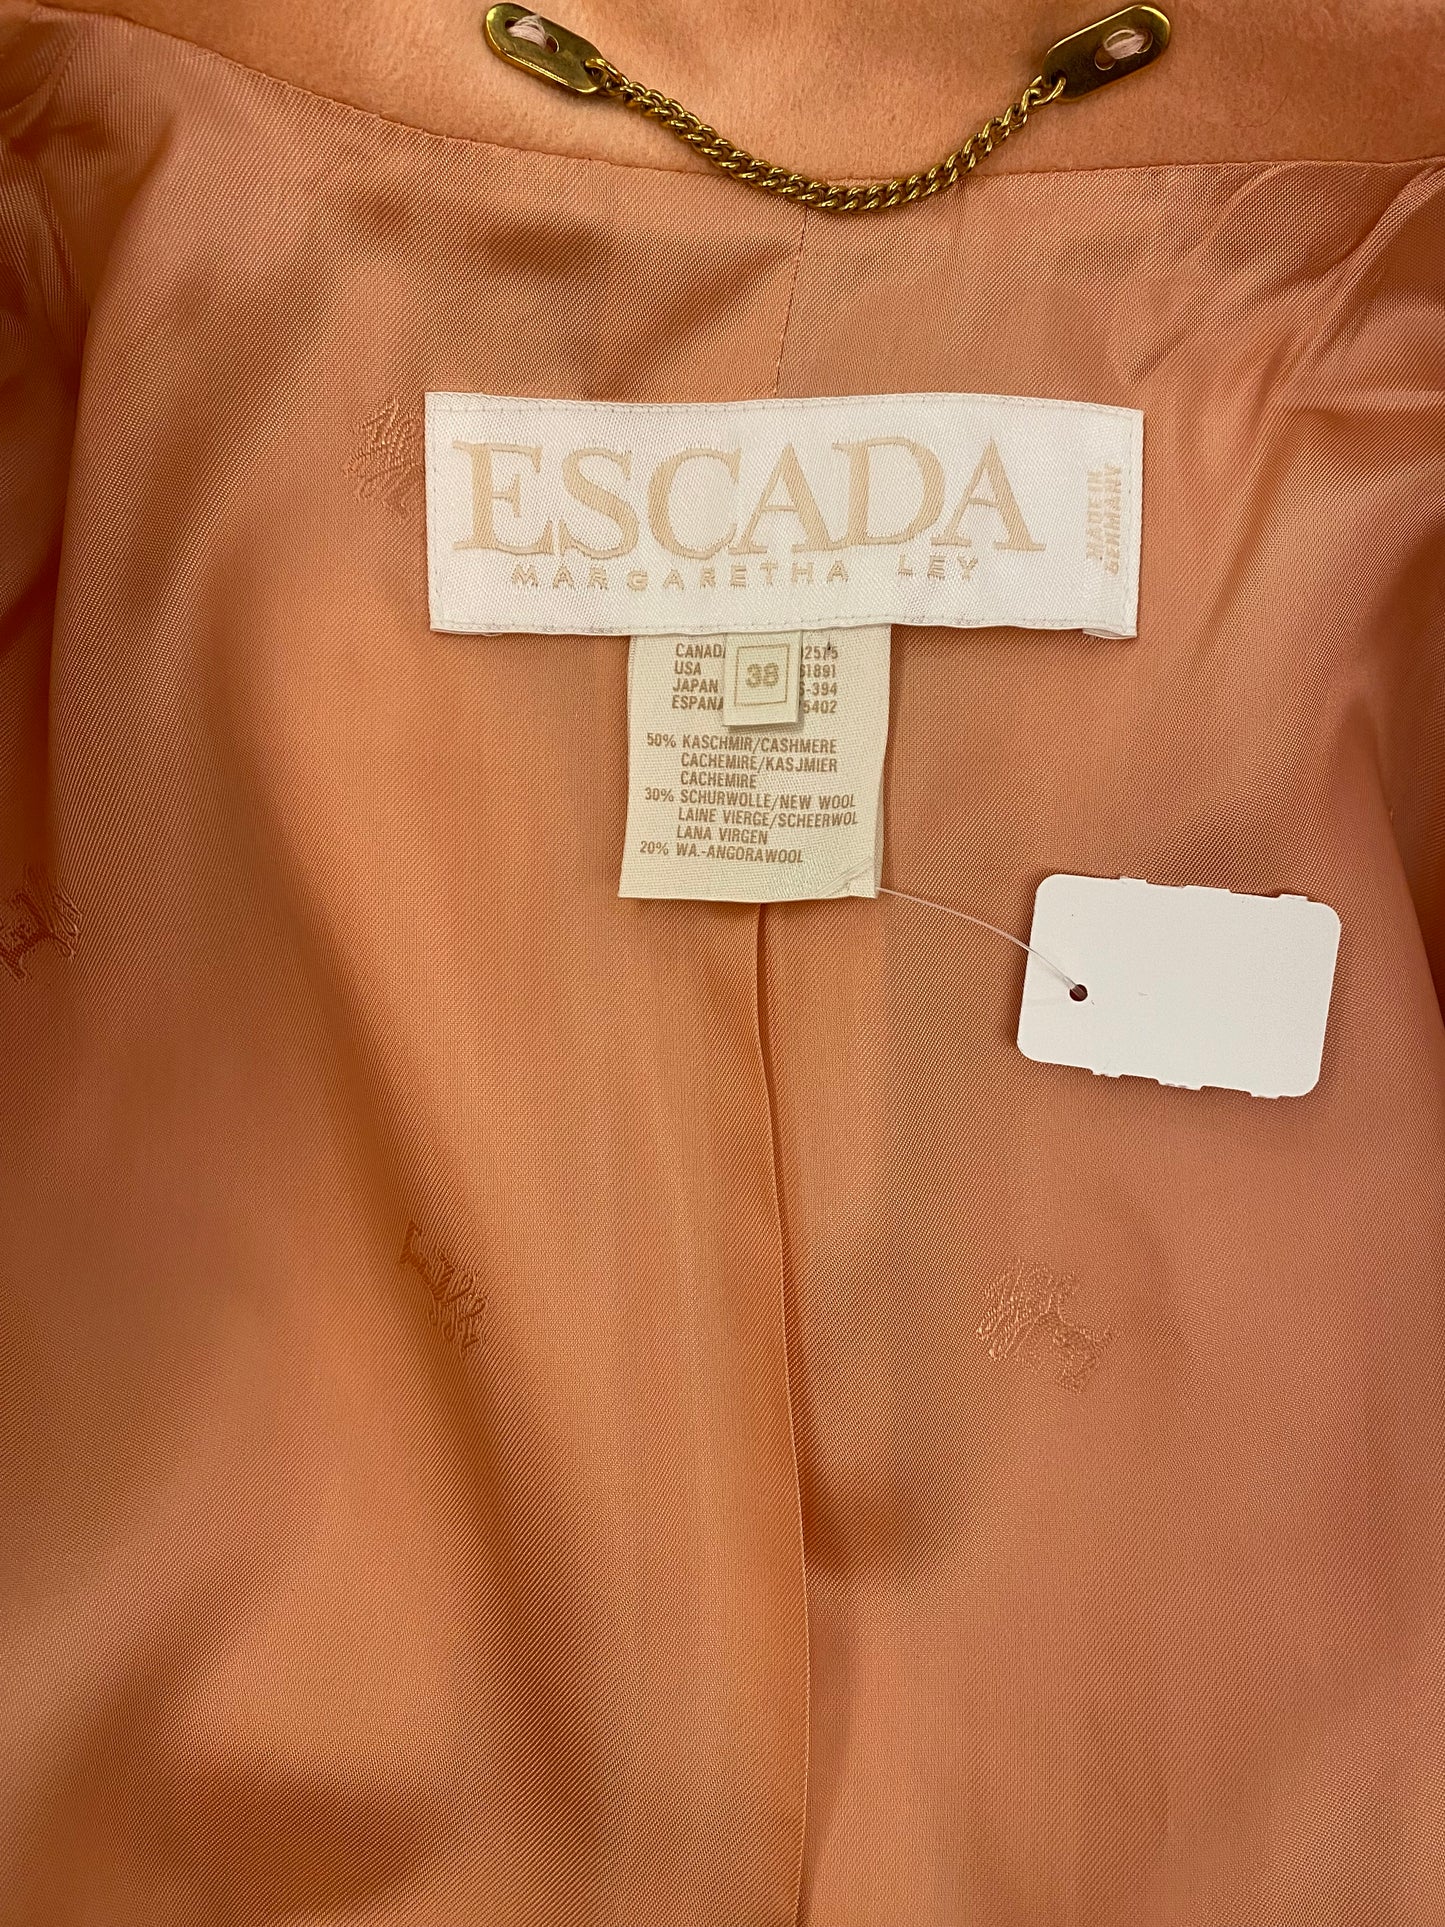 ESCADA Cashmere Jacket Size 38